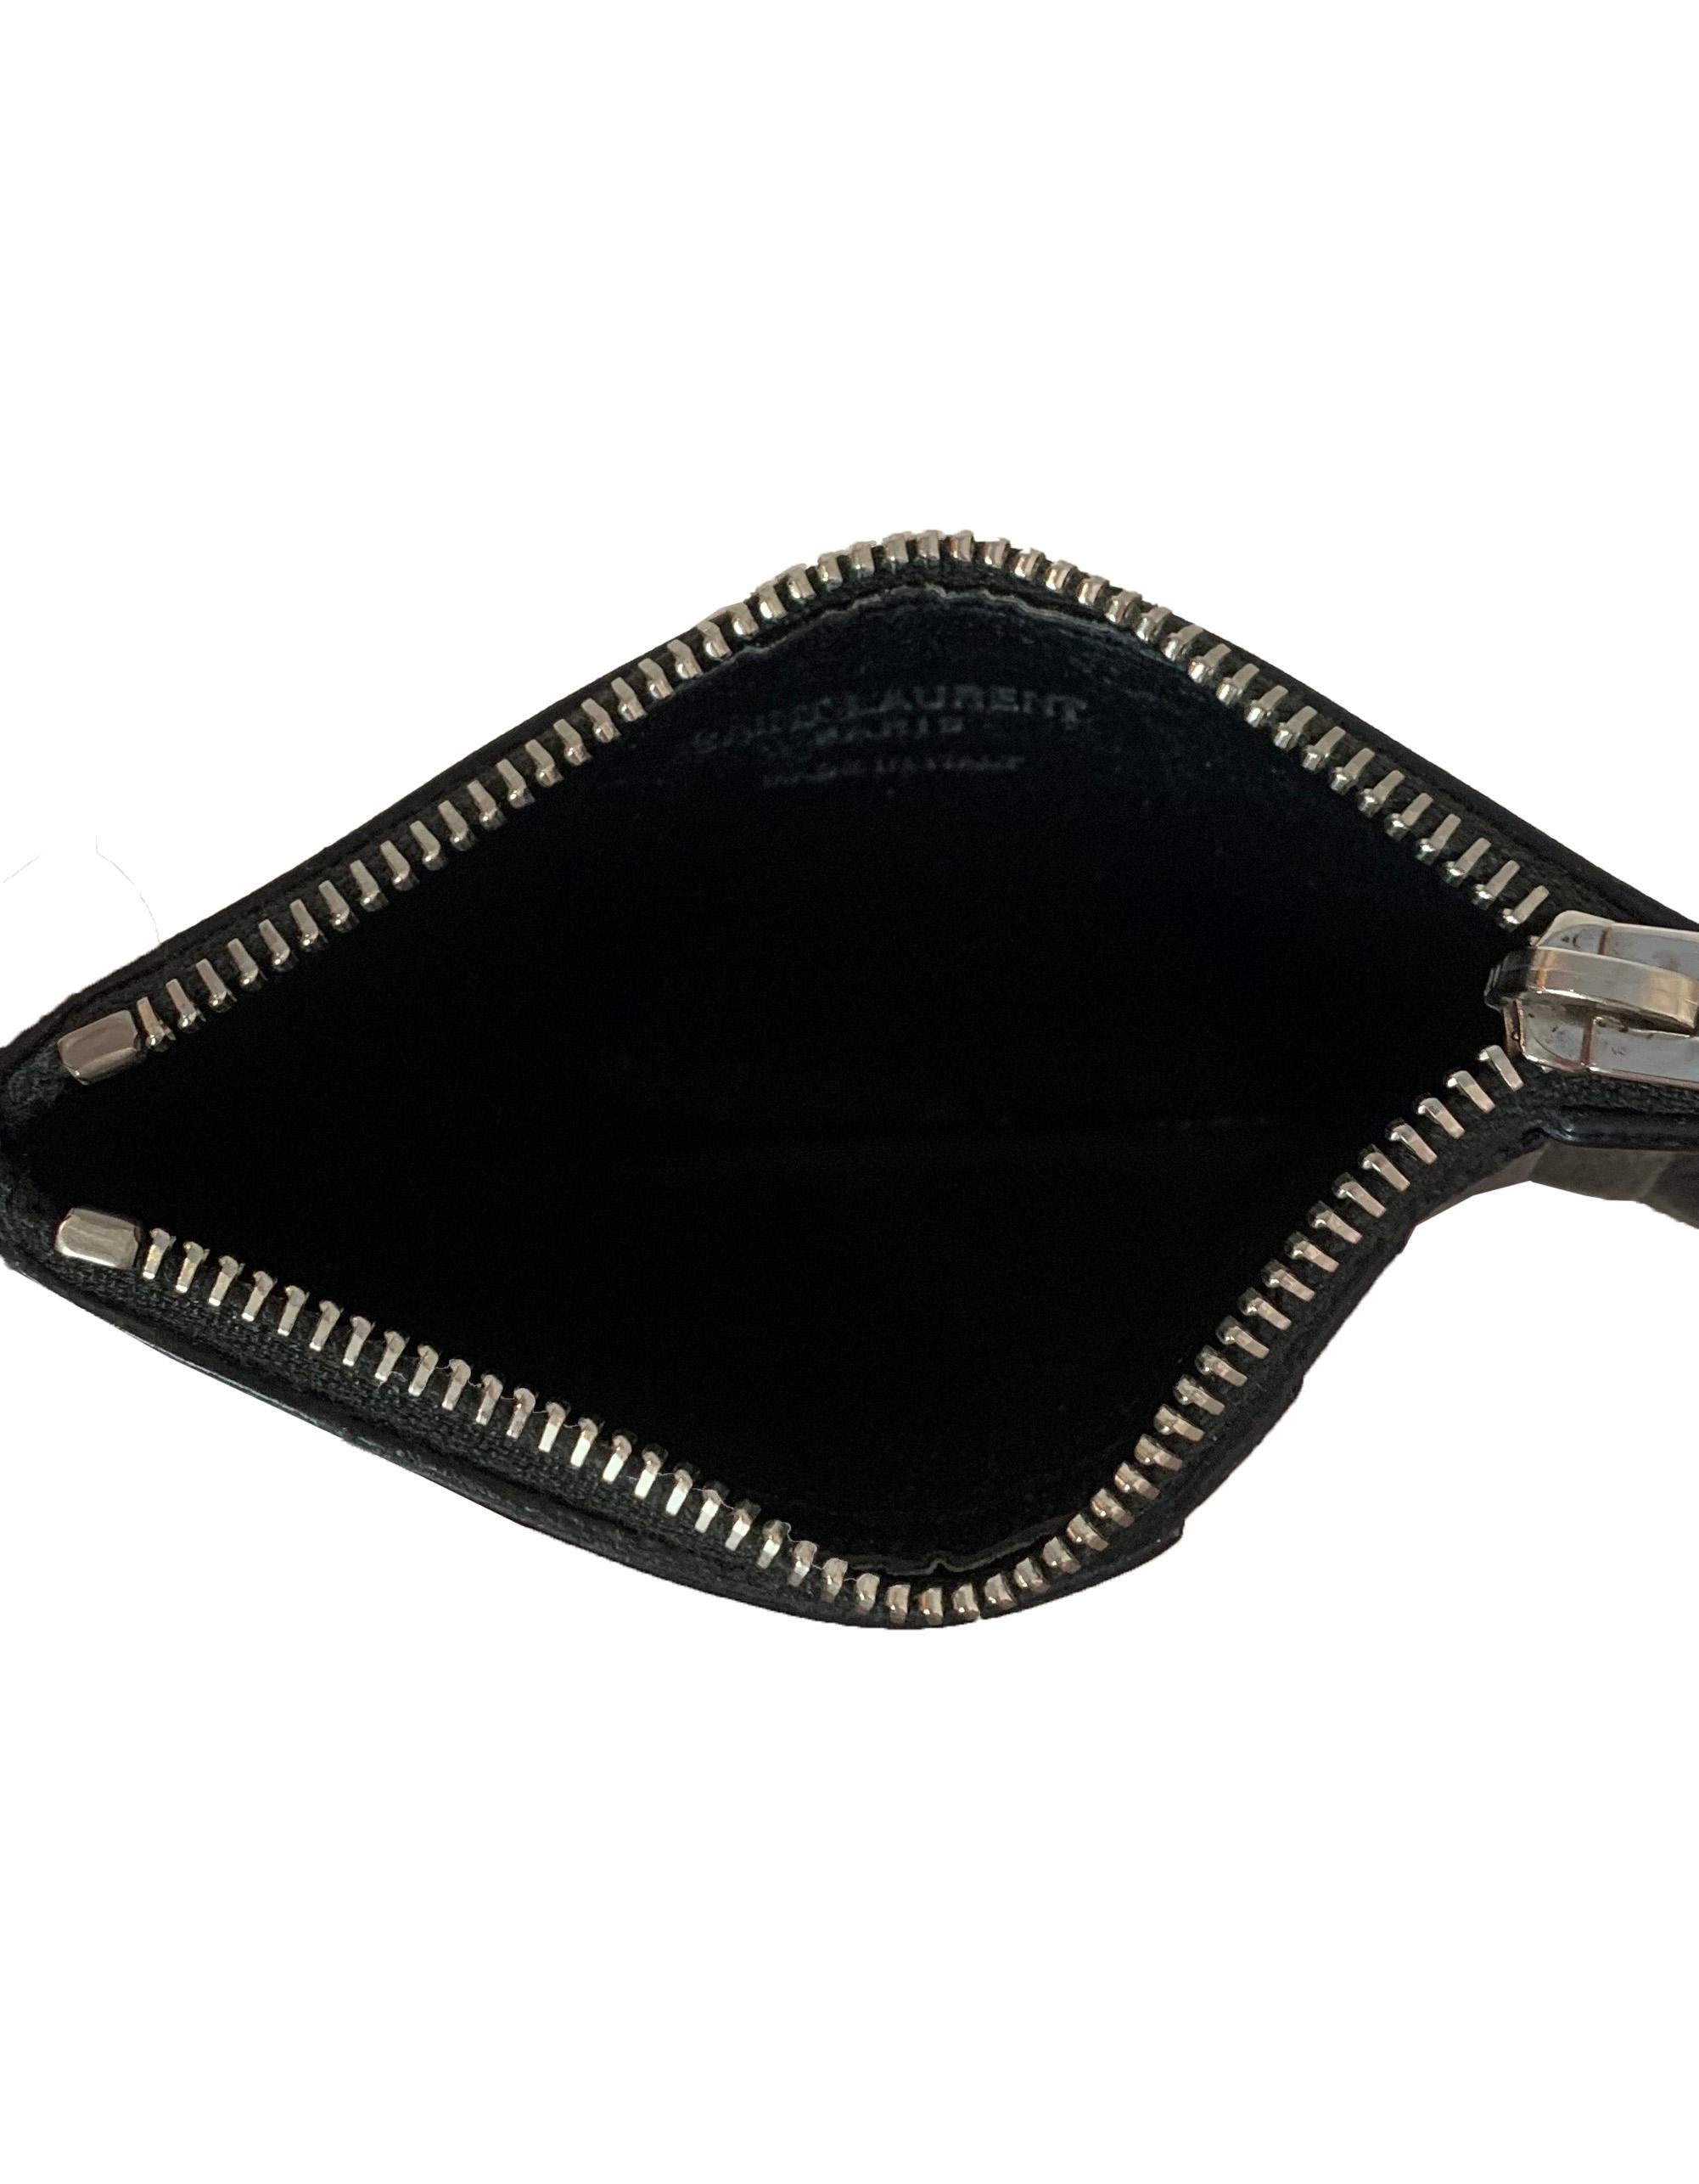 Saint Laurent Unisex Black Textured Leather Zip Top Card Holder rt. $295 5